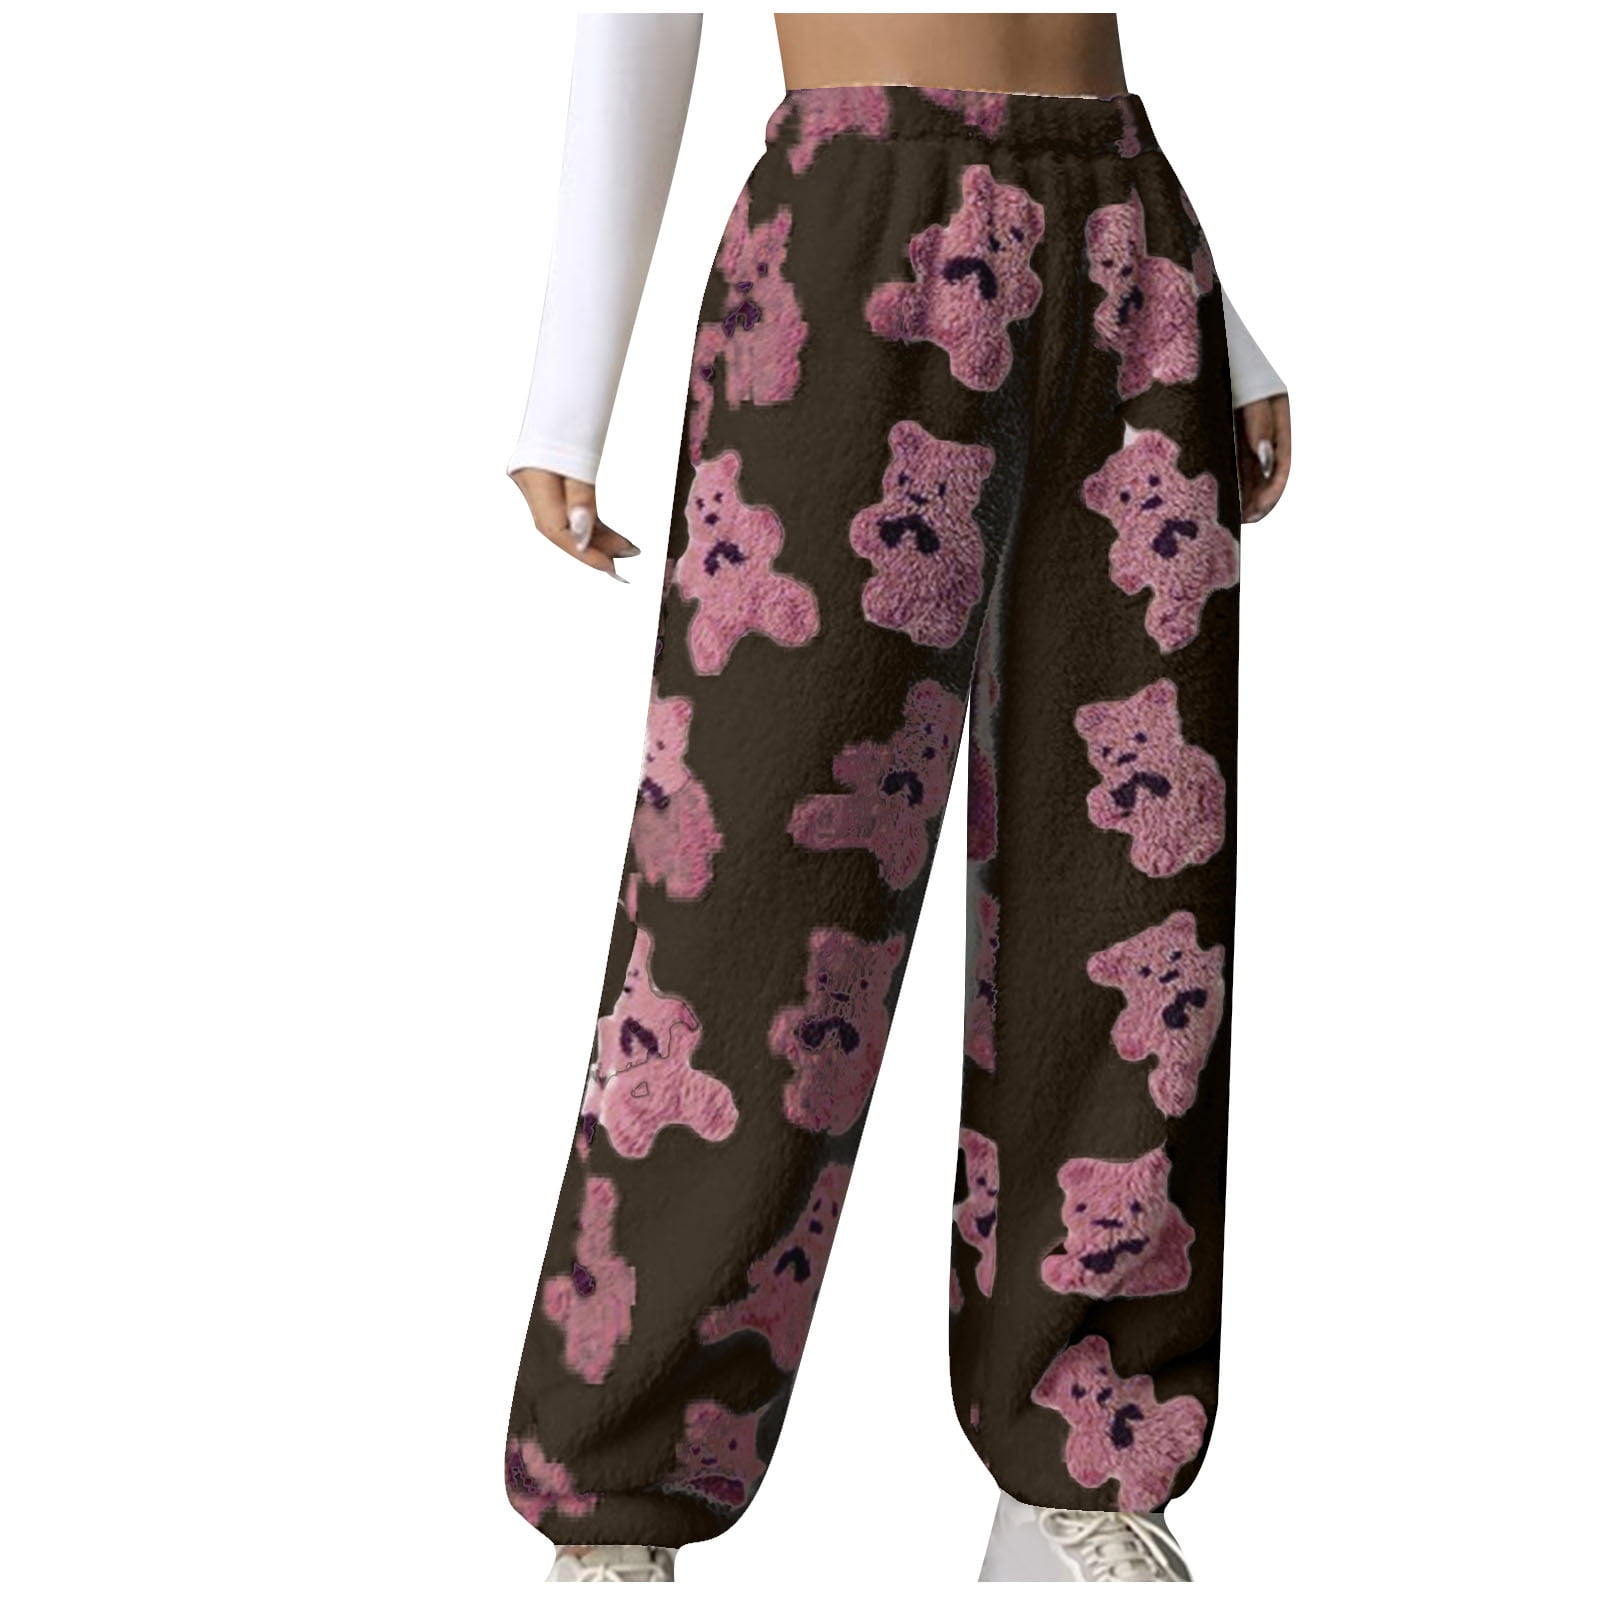 Best Deal for Jo & Bette Women's Plush Pajama Pants, Fuzzy Comfy Lounge